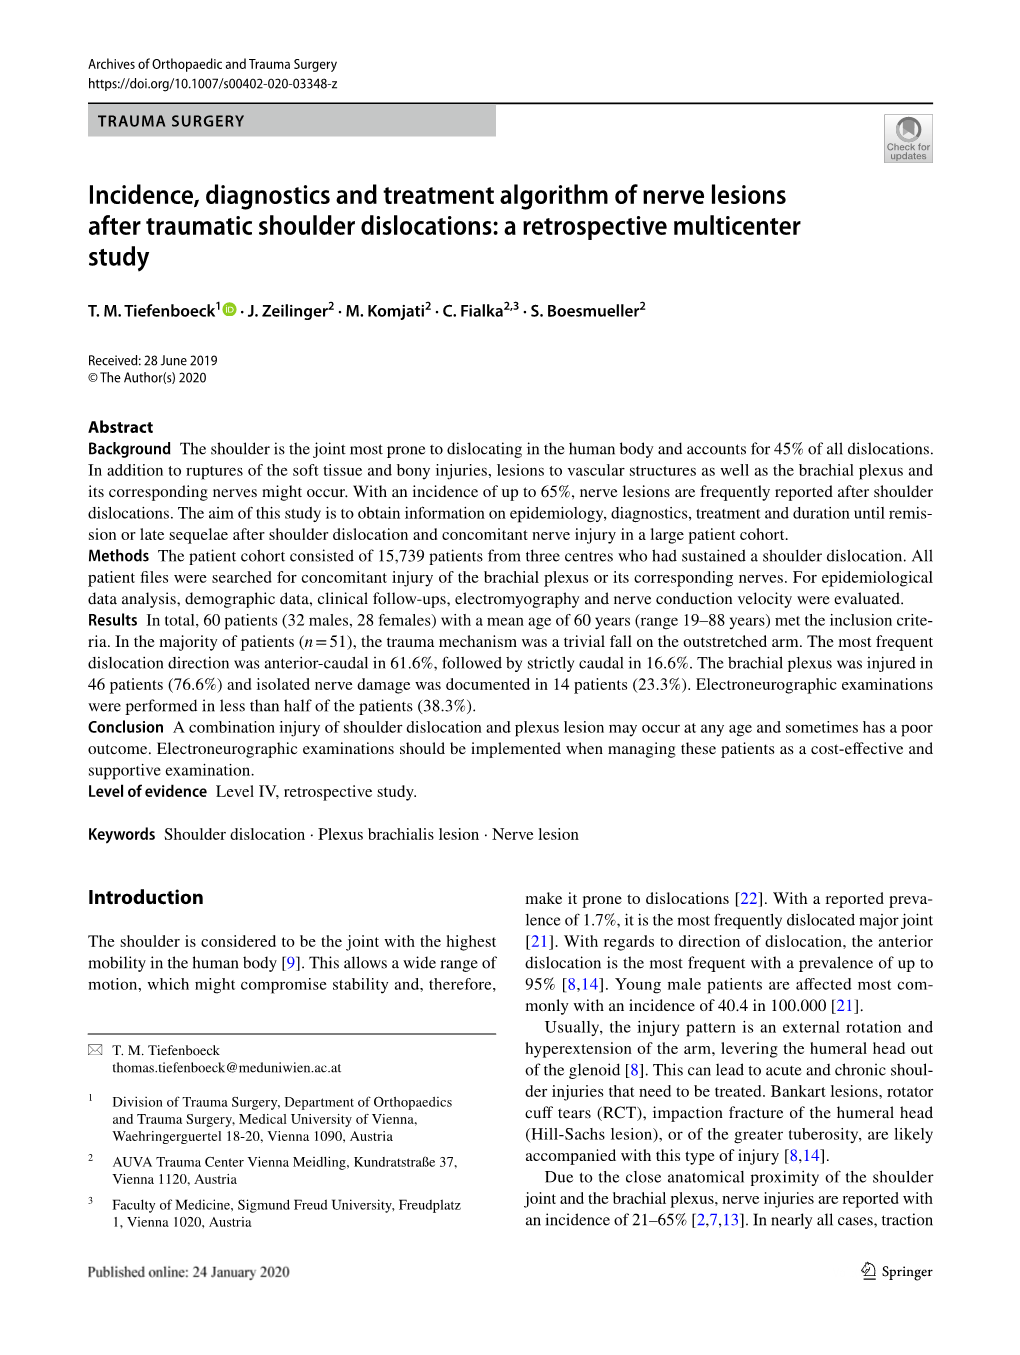 Incidence, Diagnostics and Treatment Algorithm of Nerve Lesions After Traumatic Shoulder Dislocations: a Retrospective Multicenter Study